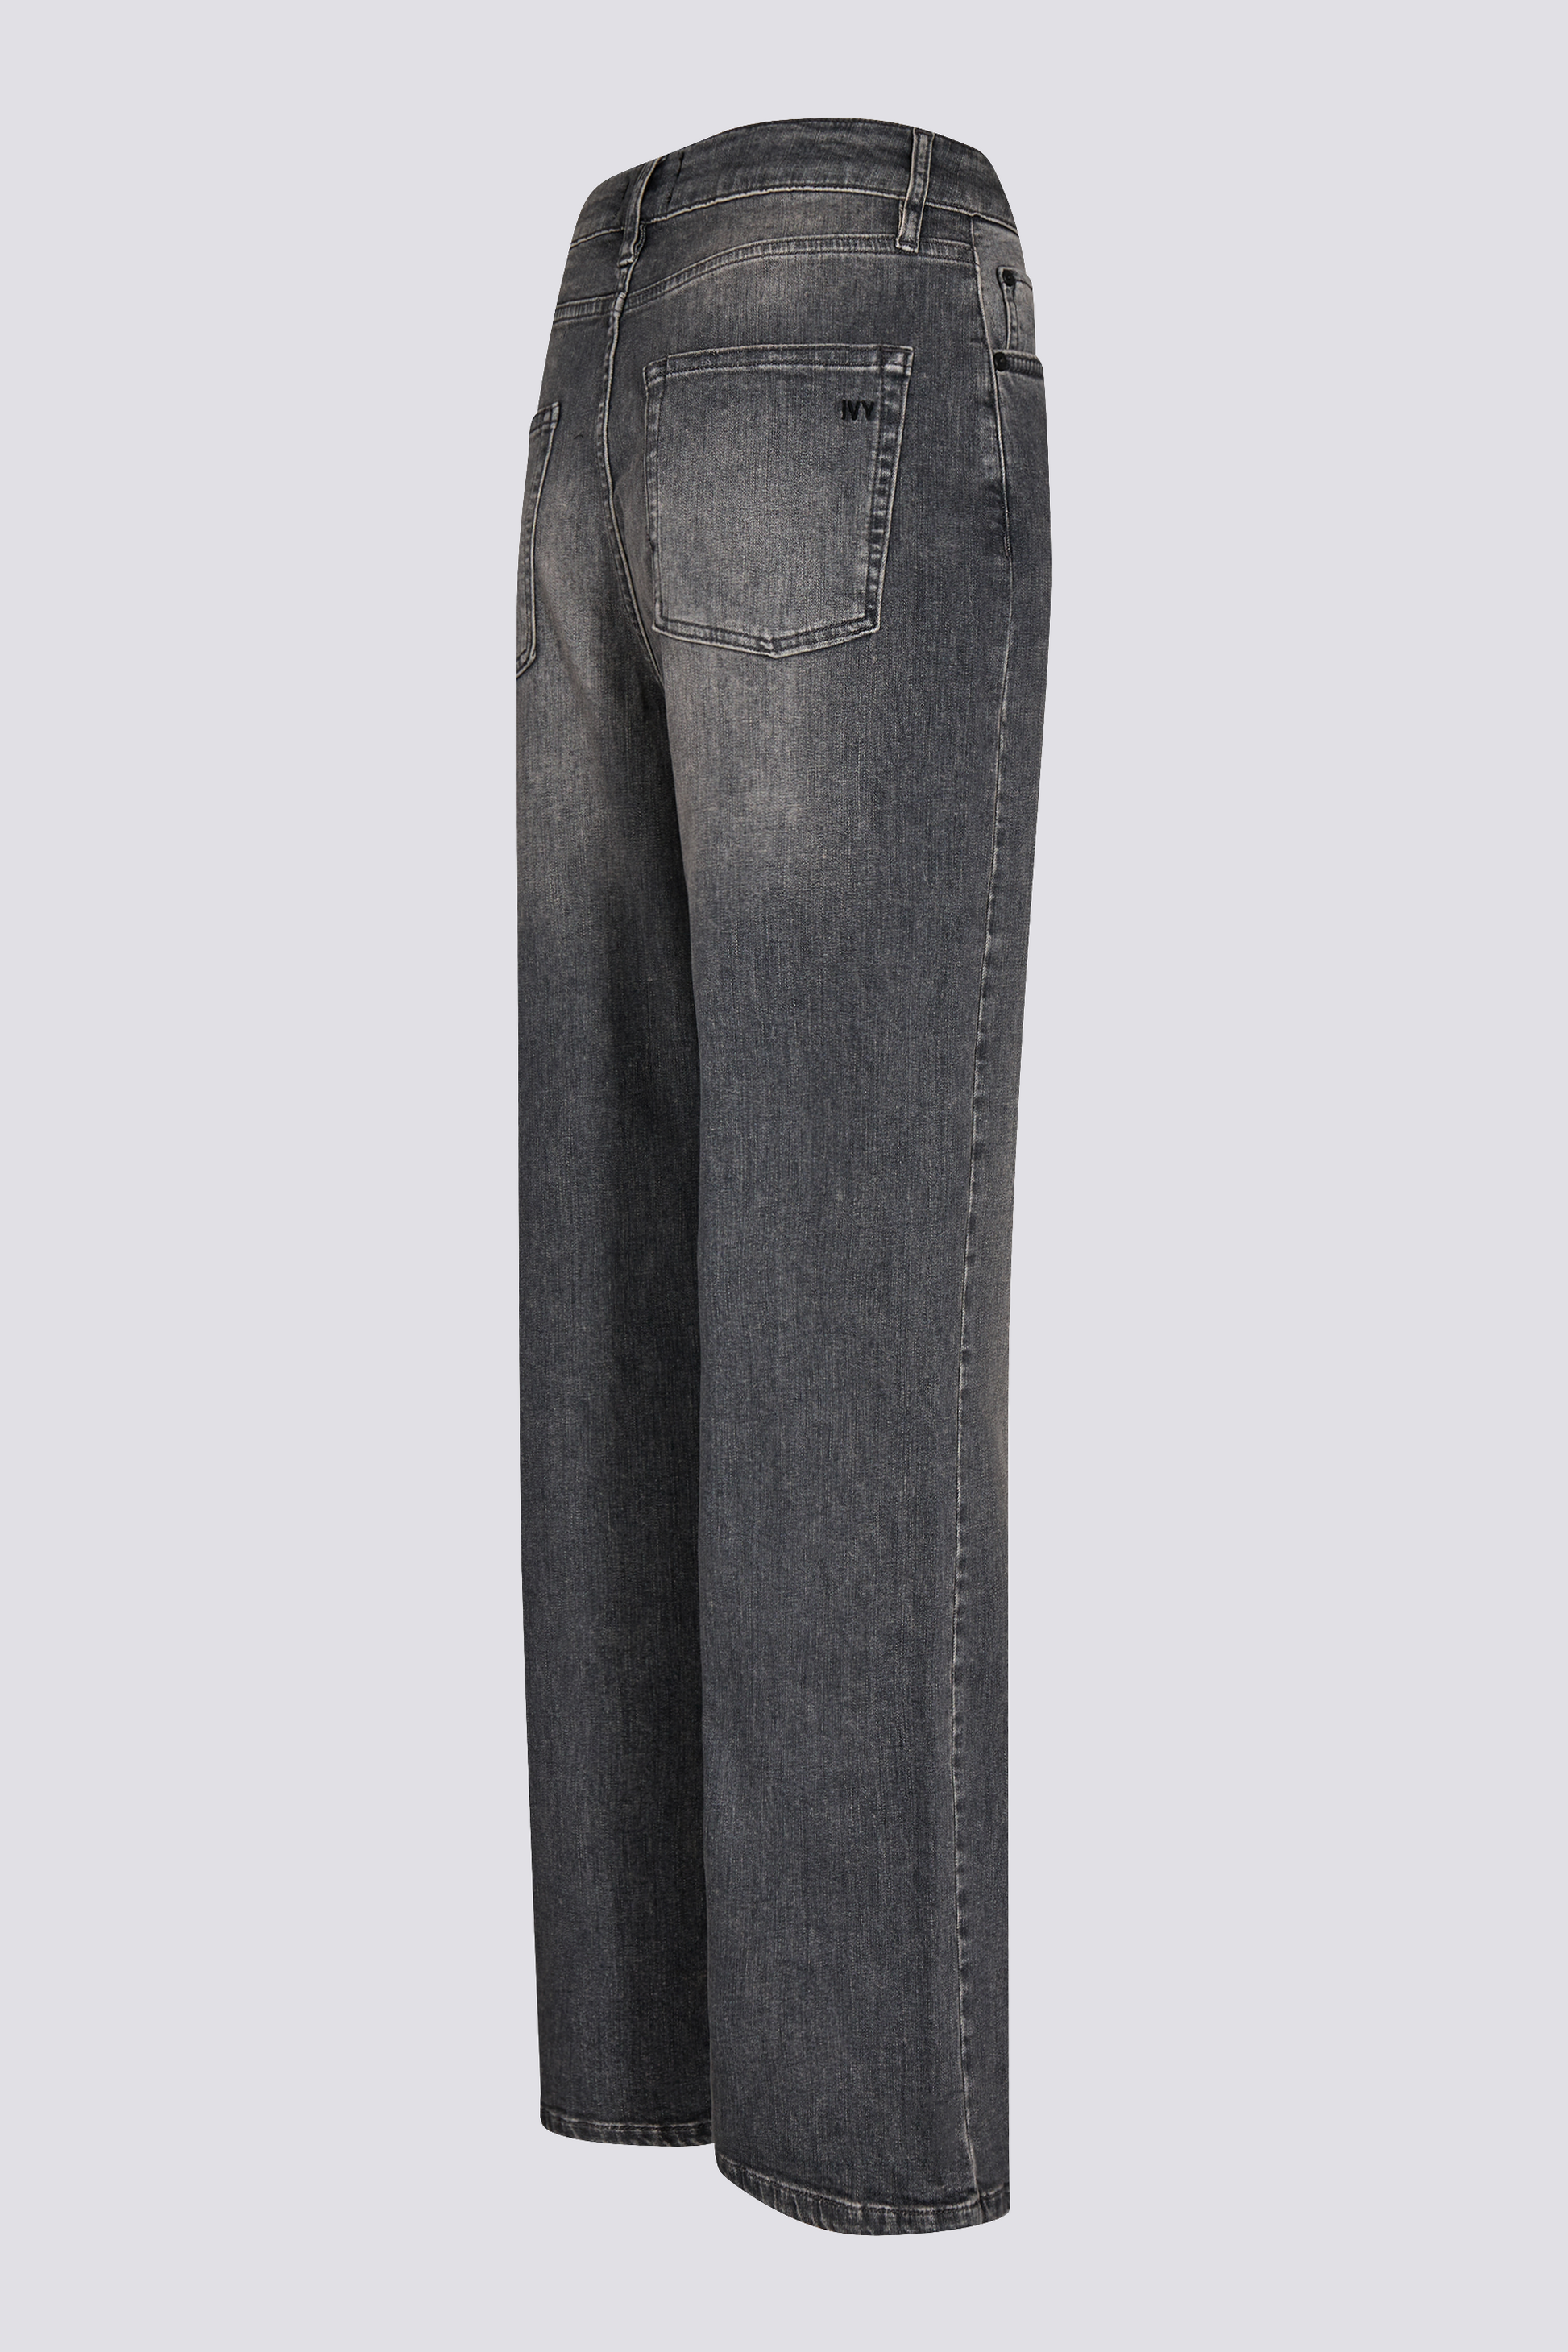 IVY Copenhagen IVY-Brooke Jeans Wash Sterling Grey Jeans & Pants 8 Grey